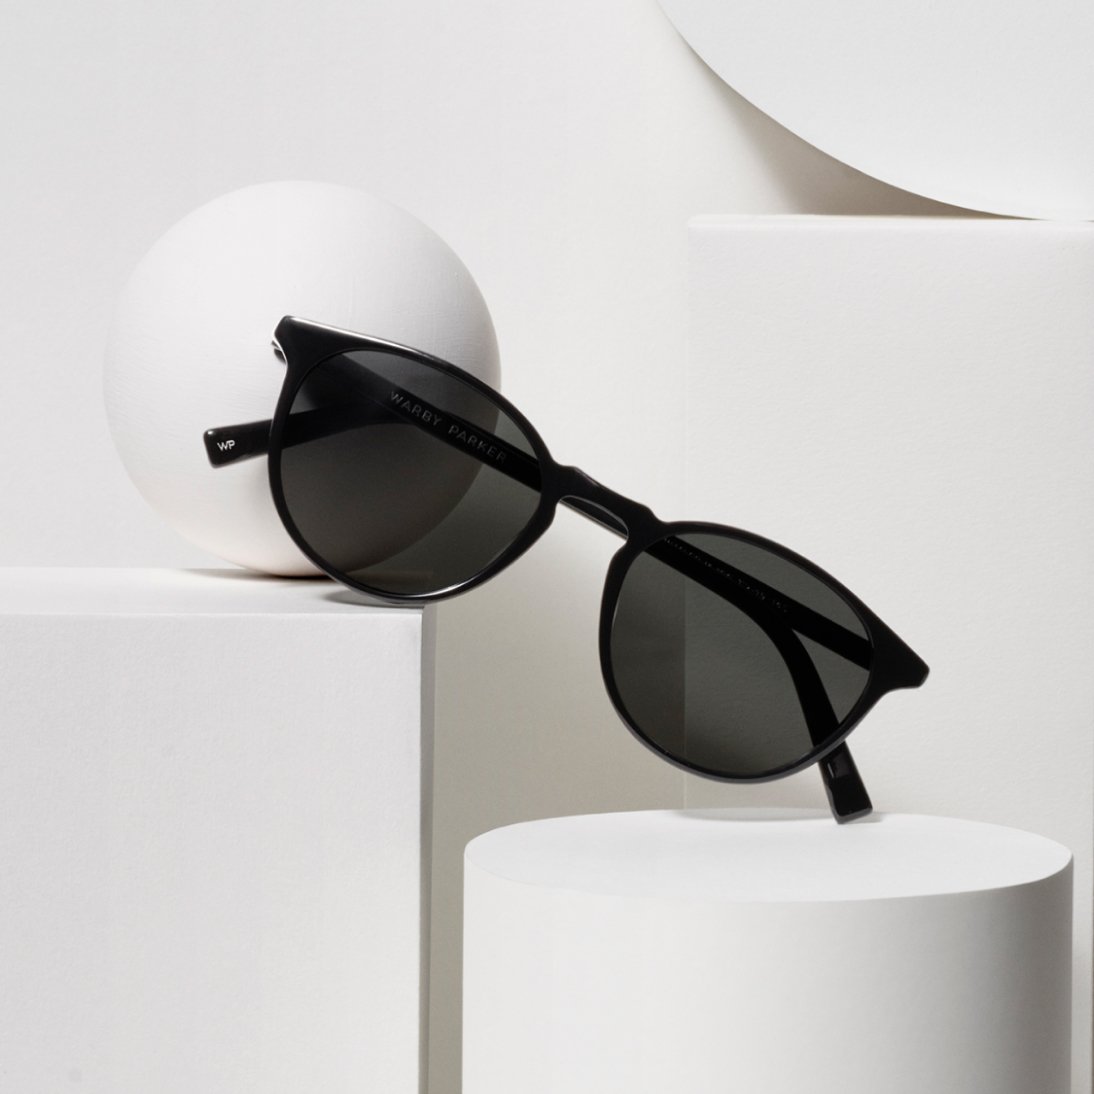 Glasses and Prescription Sunglasses Online